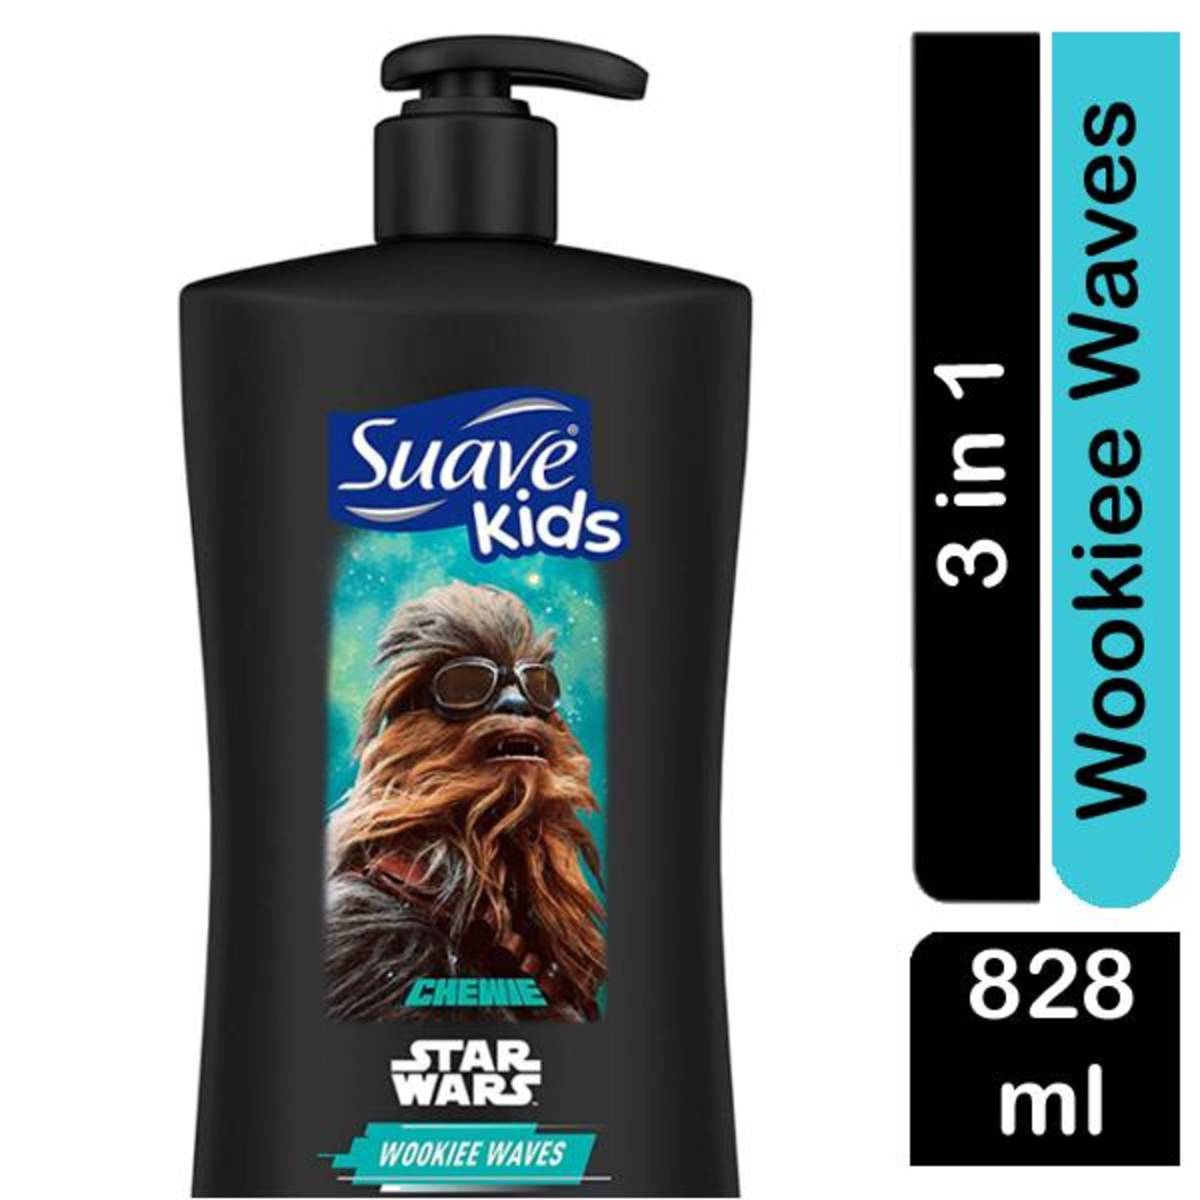 Suave Kids 3in1 Shampoo + Conditioner + Body Wash Star Wars Chewie Wookie Waves 828ml Black - Baby Moo